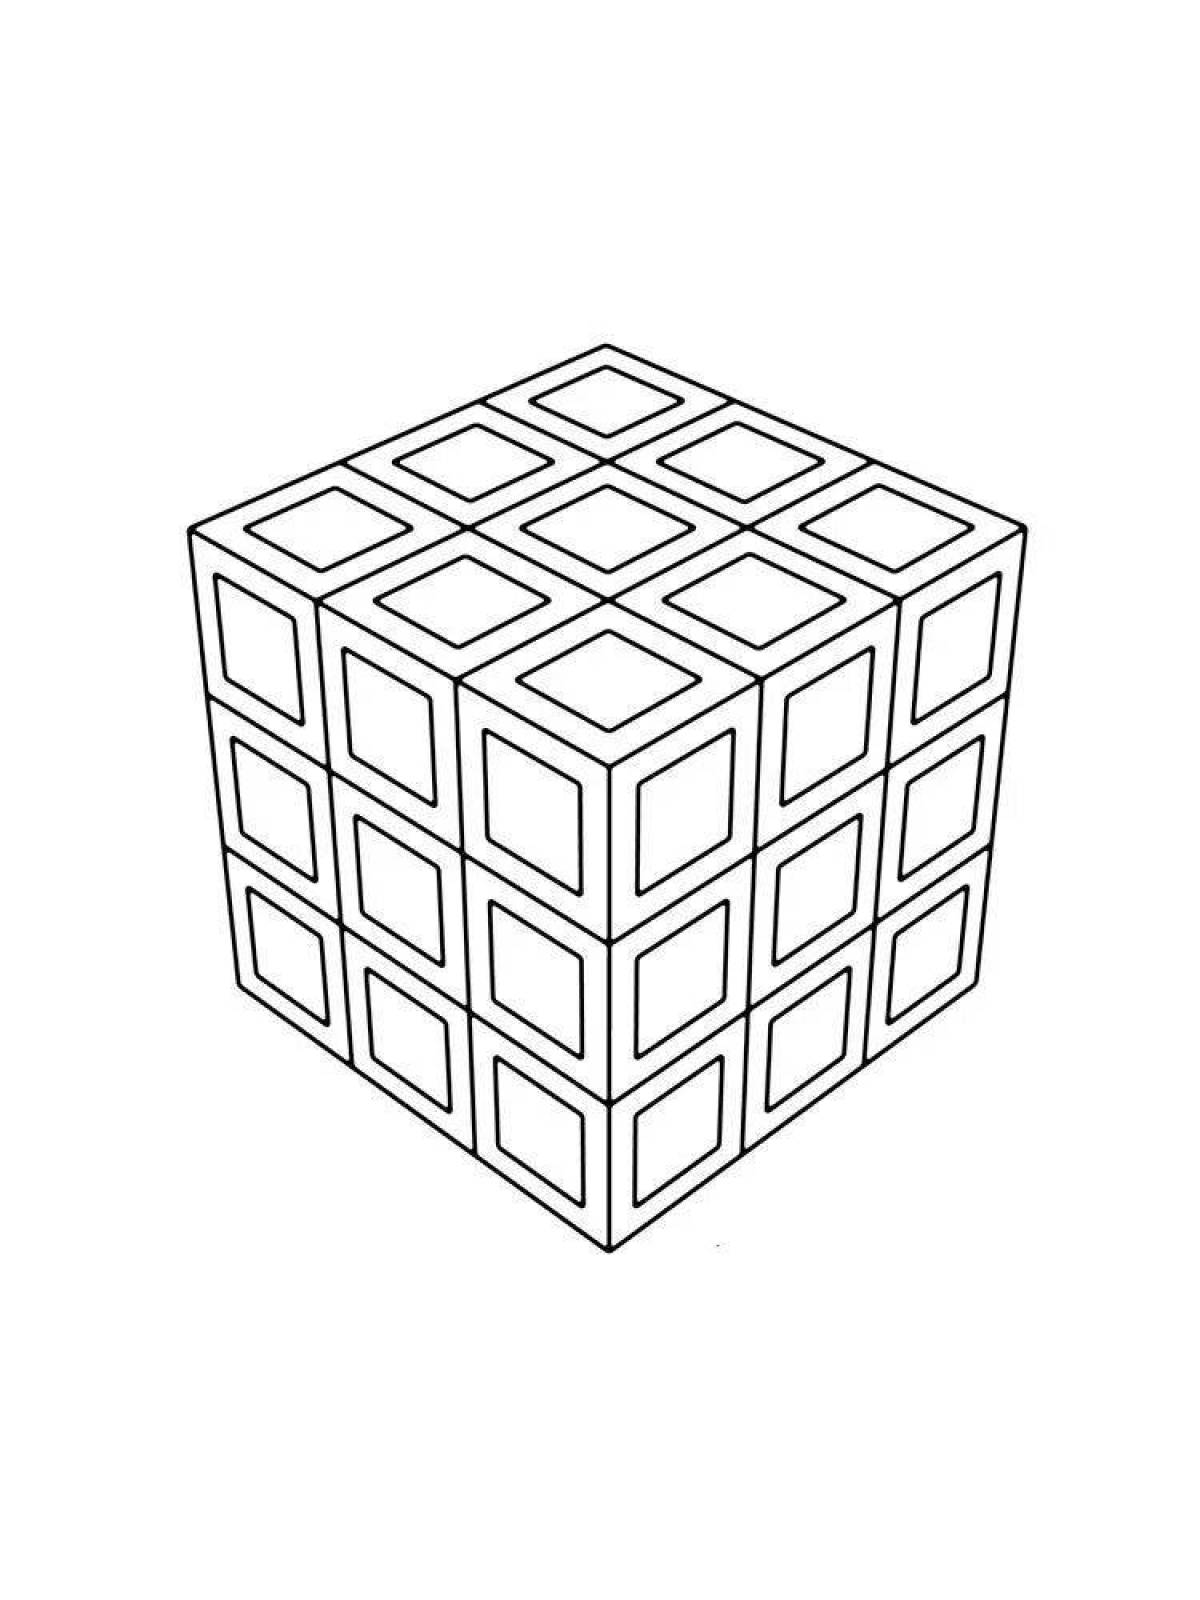 Захватывающая раскраска кубика рубика